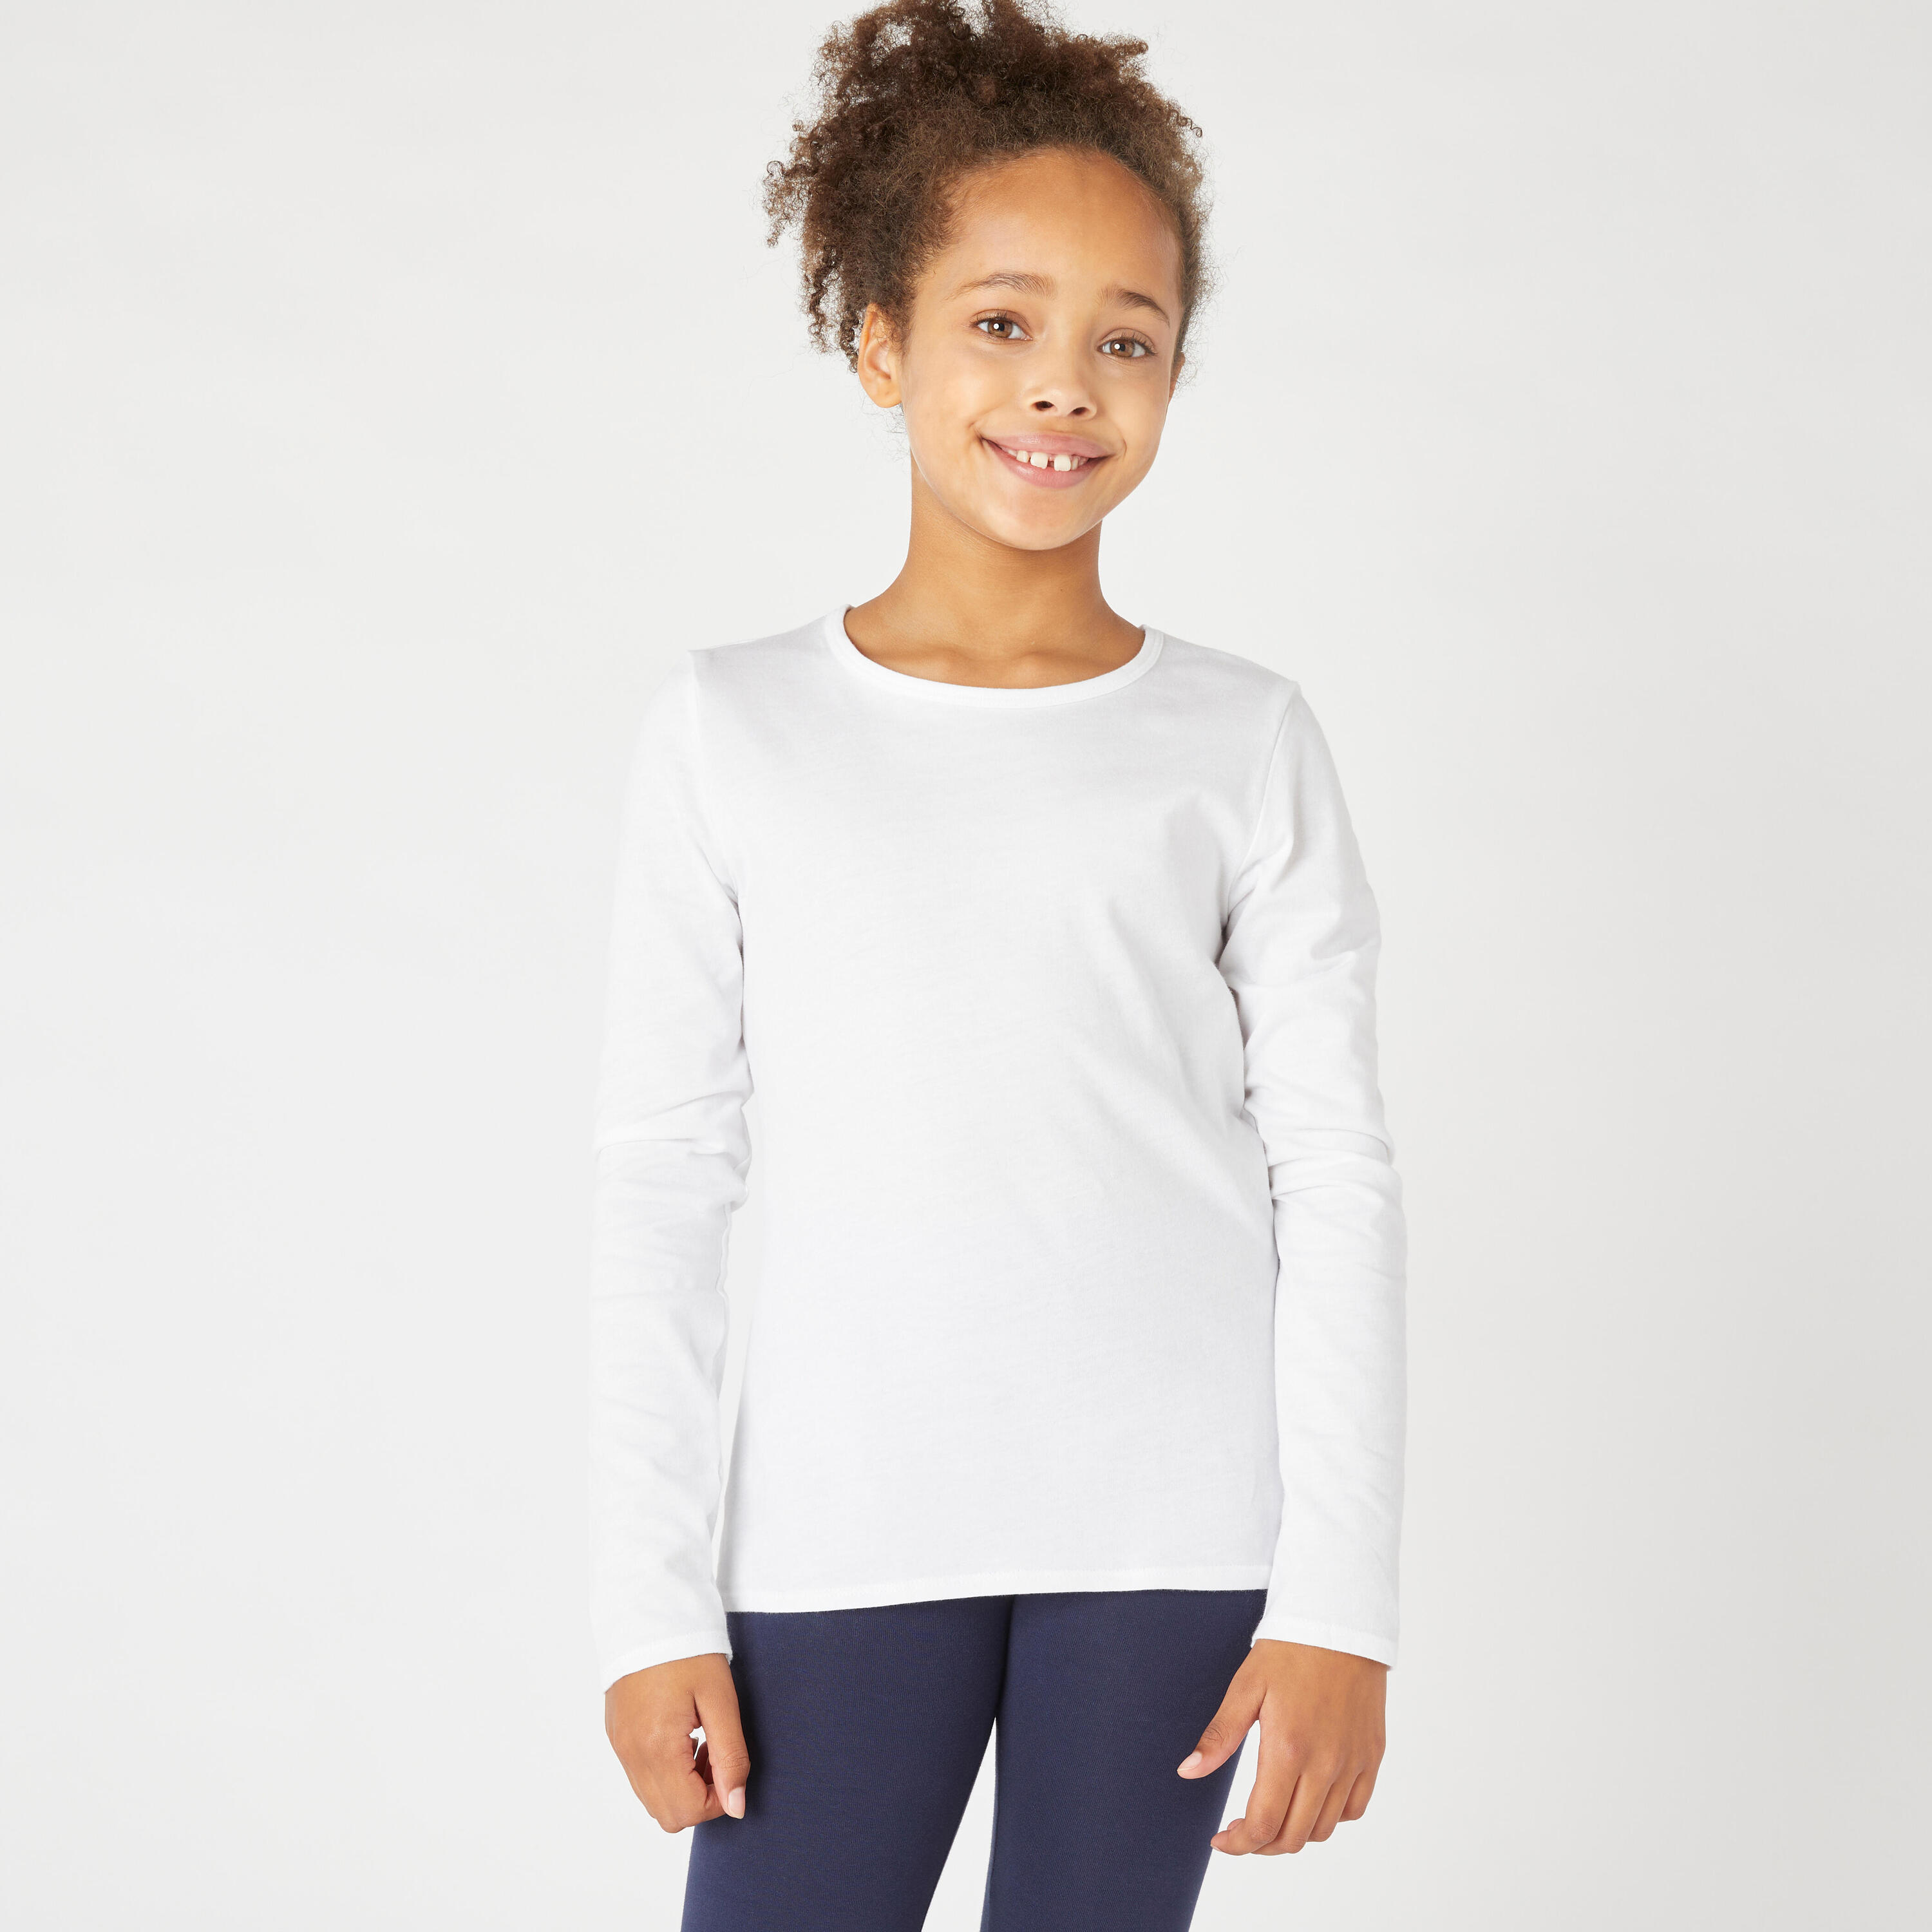 DOMYOS Kids' Basic Long-Sleeved Cotton T-Shirt - White